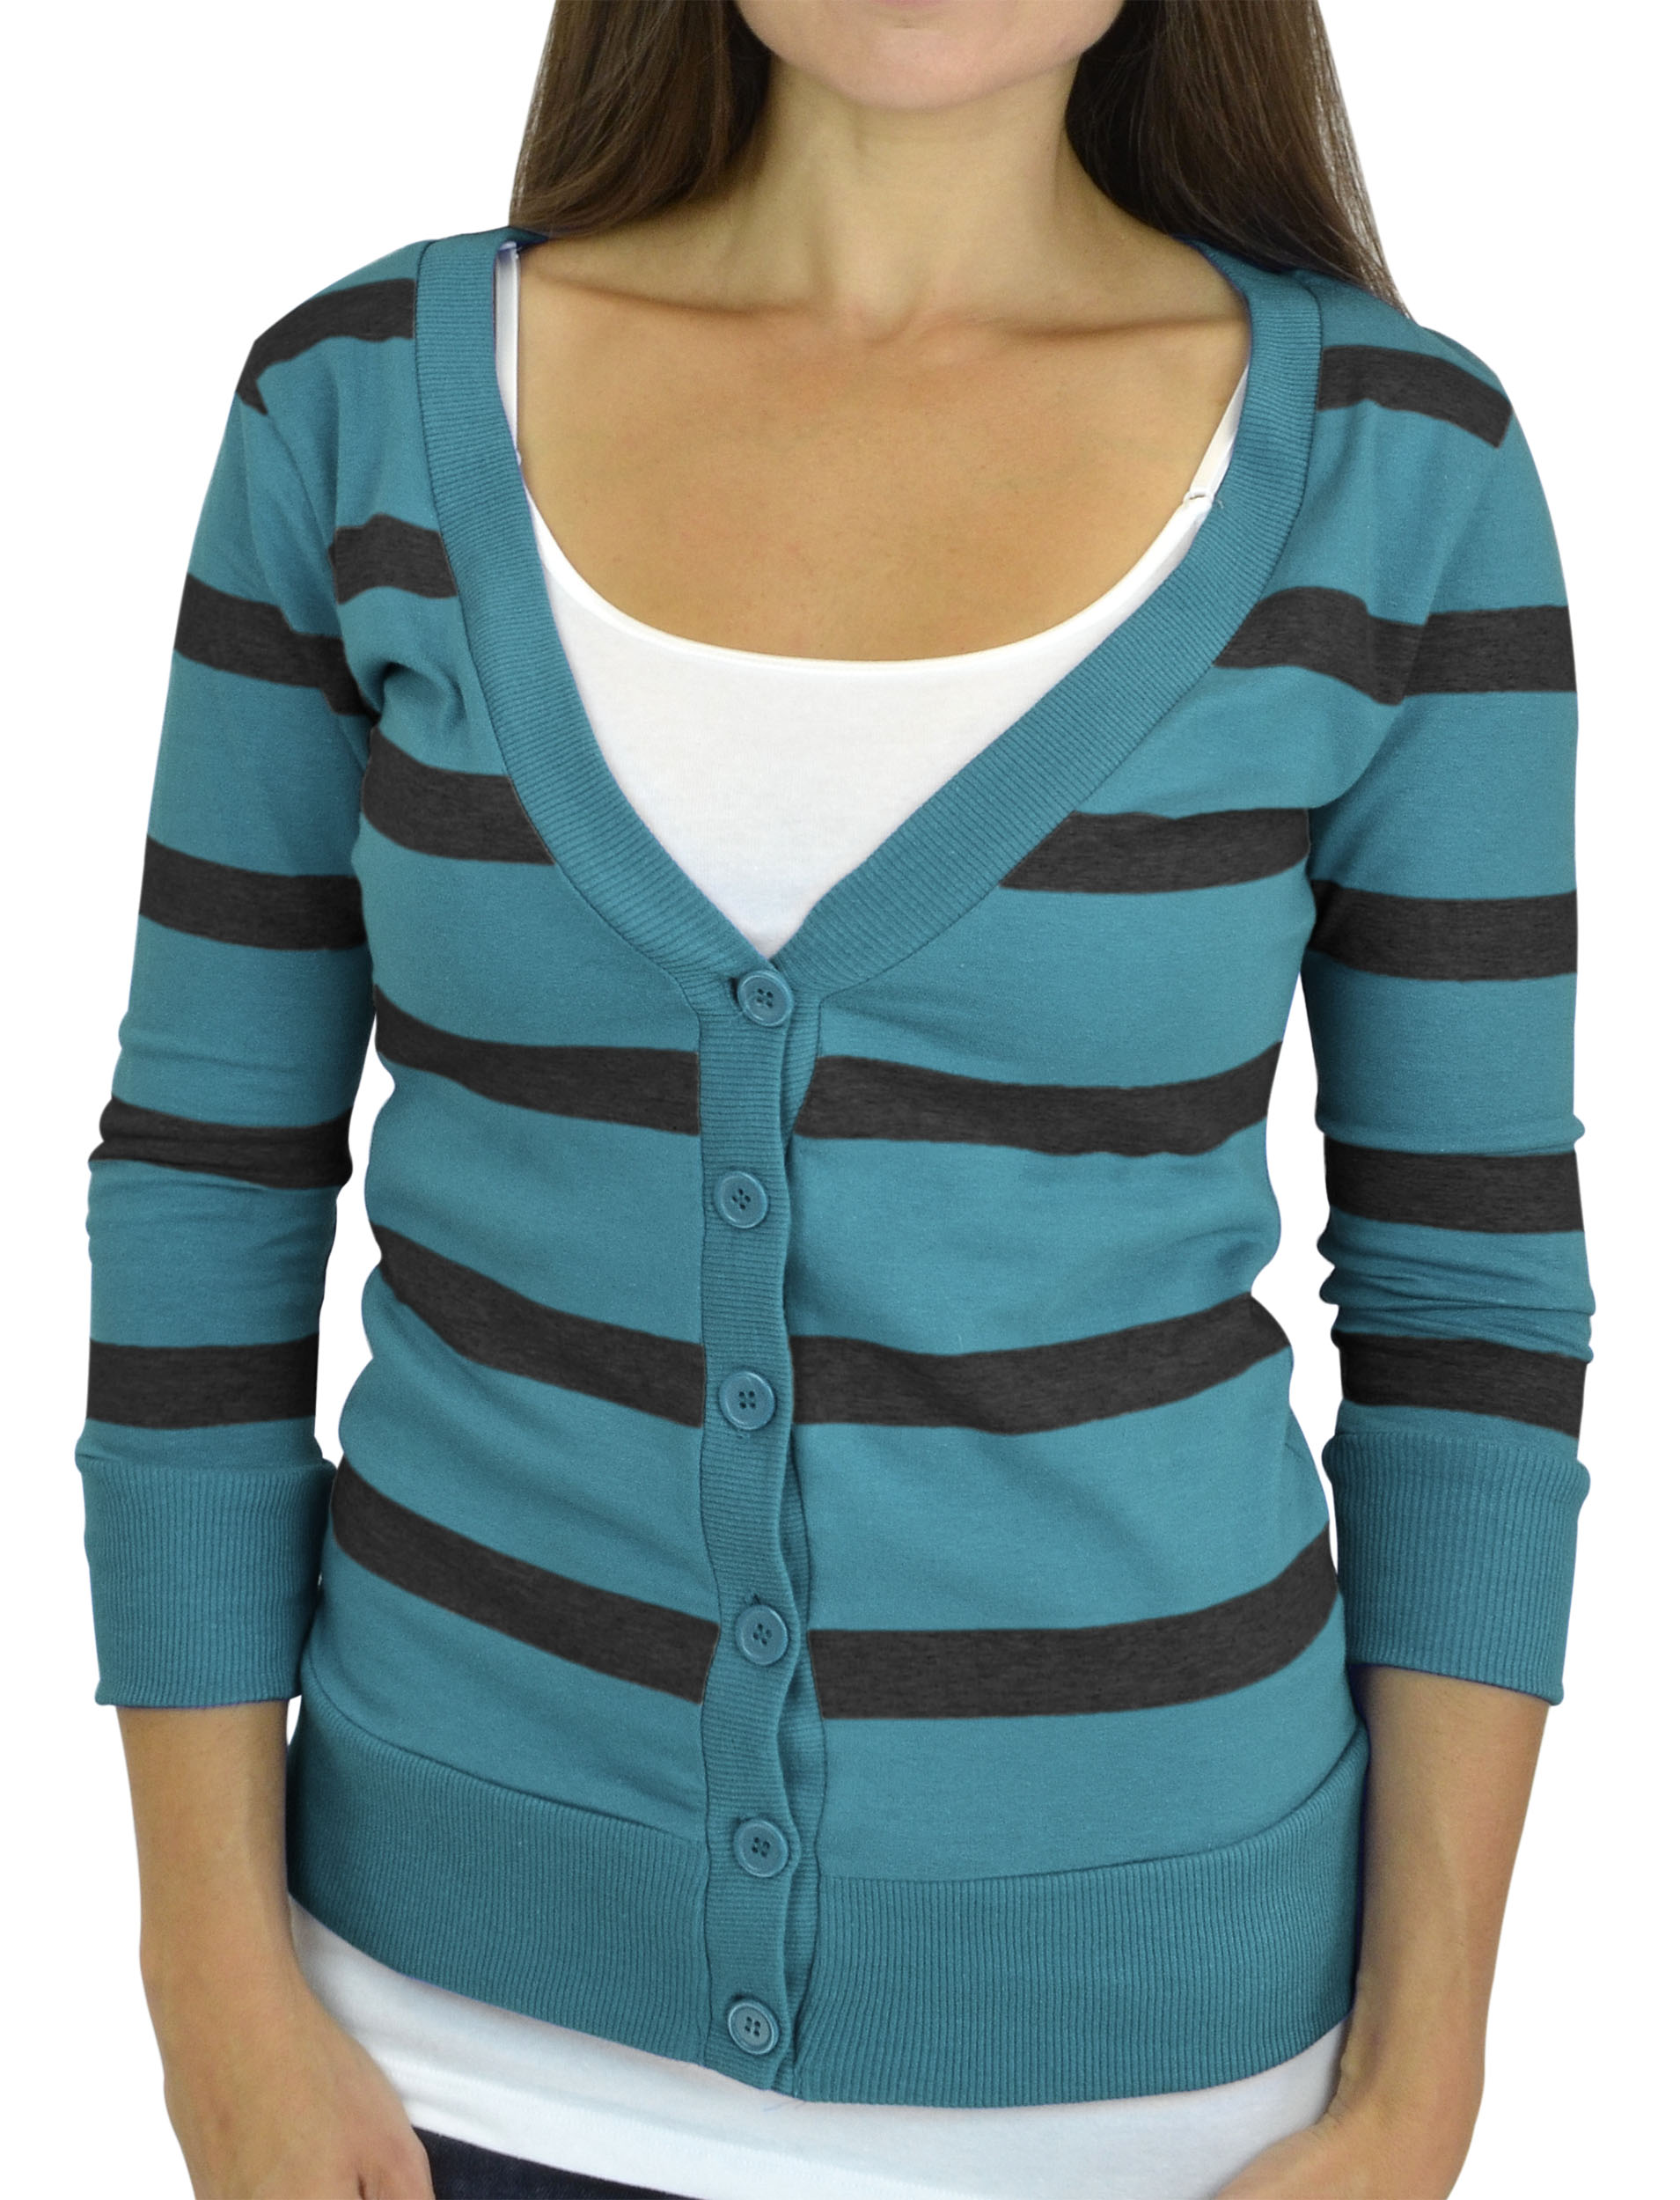 Belle Donne - Women / Girl Junior Size Soft 3/4 Sleeve V-Neck Sweater Cardigans - Black/Large